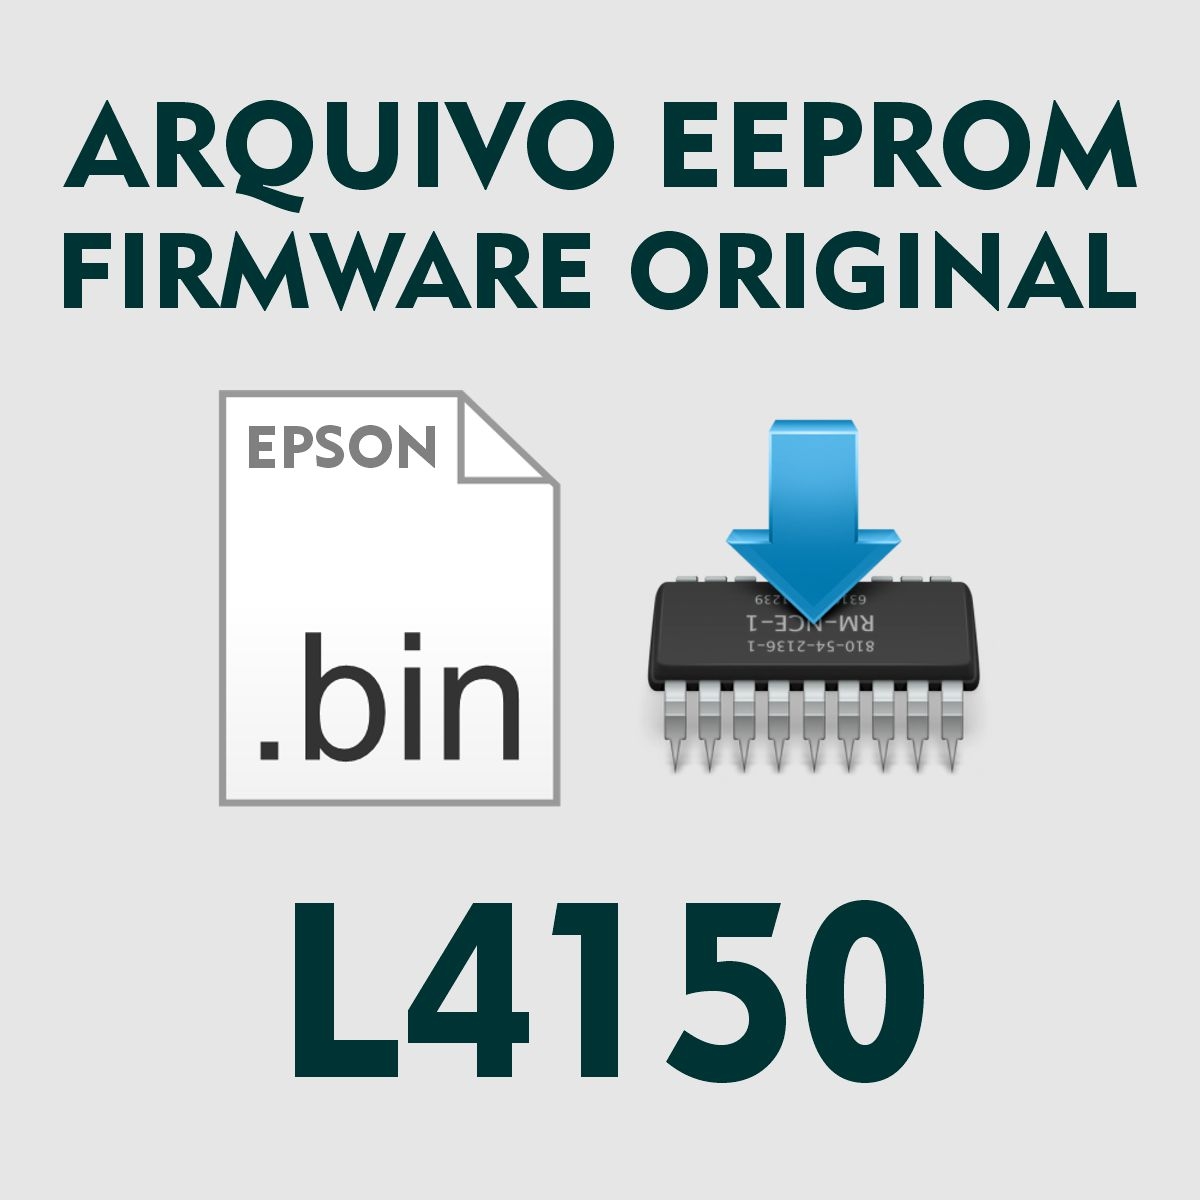 Epson L4150 | Arquivo de Eeprom Firmware .bin - Original